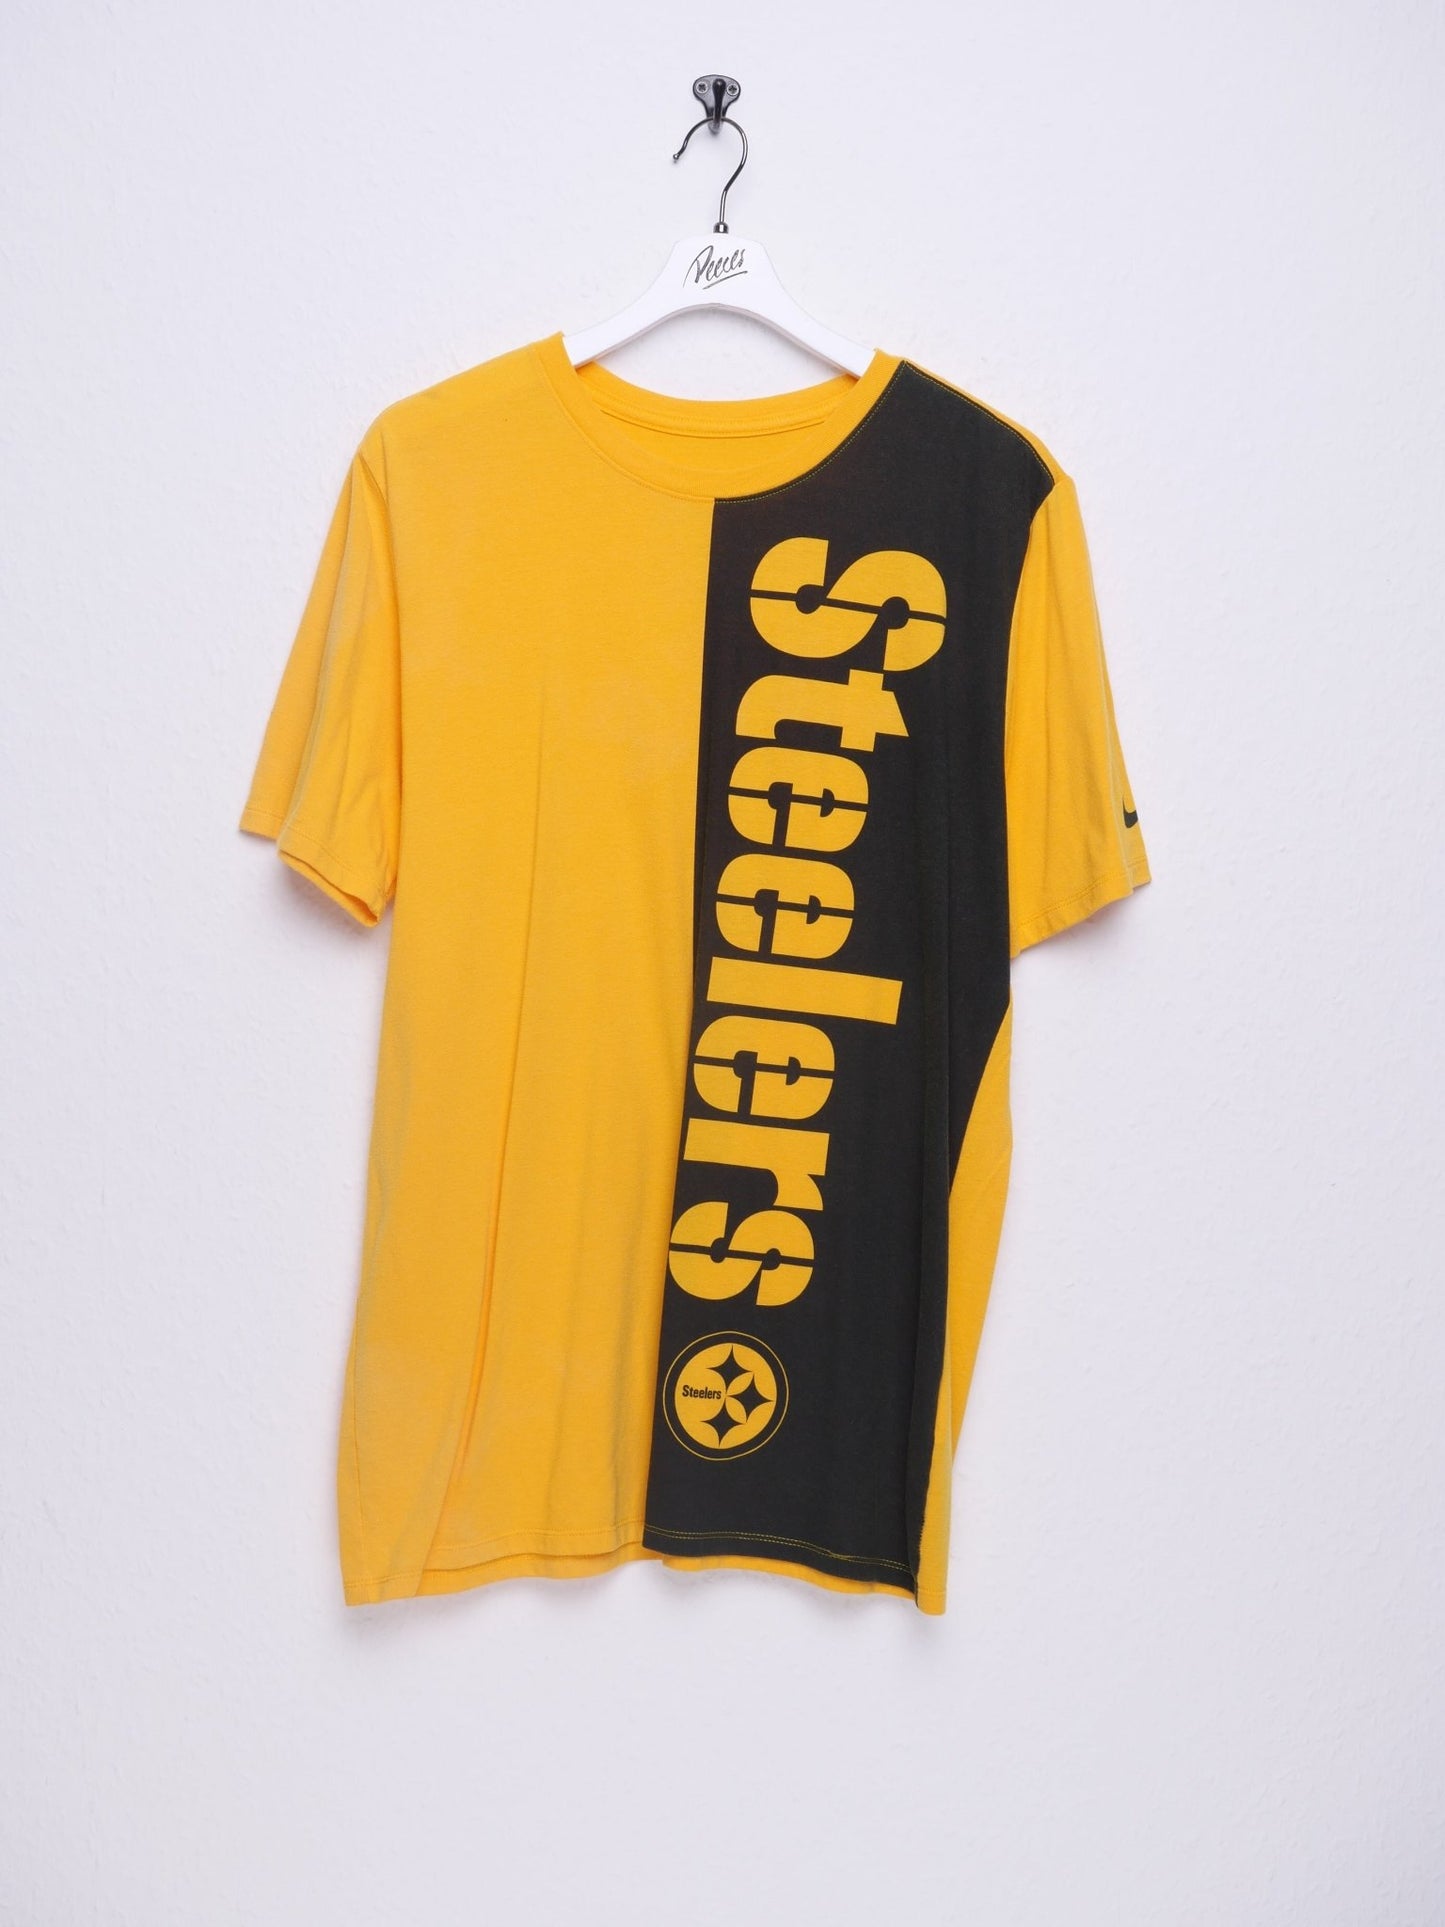 nike NFL Steelers printed Swoosh yellow Shirt - Peeces